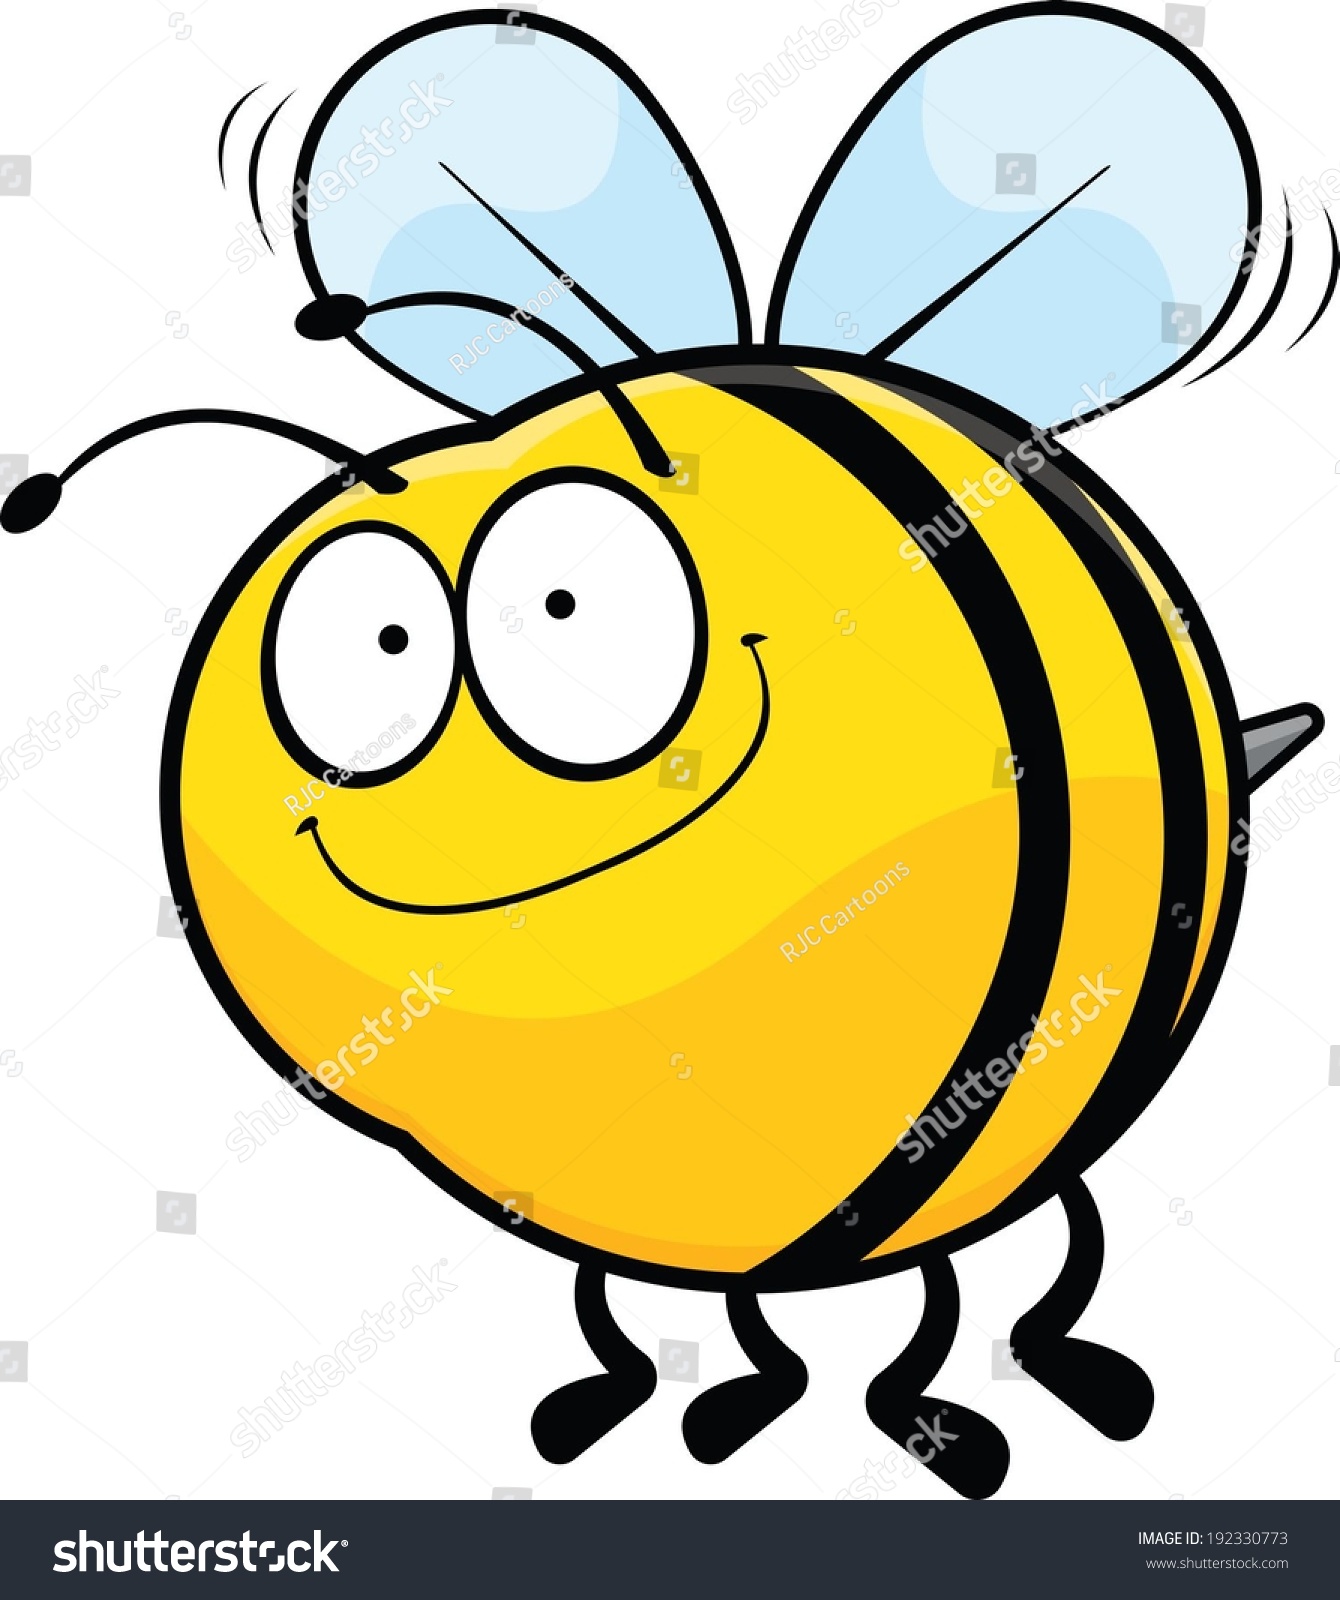 Cartoon Illustration Of A Smiling Bee. - 192330773 : Shutterstock